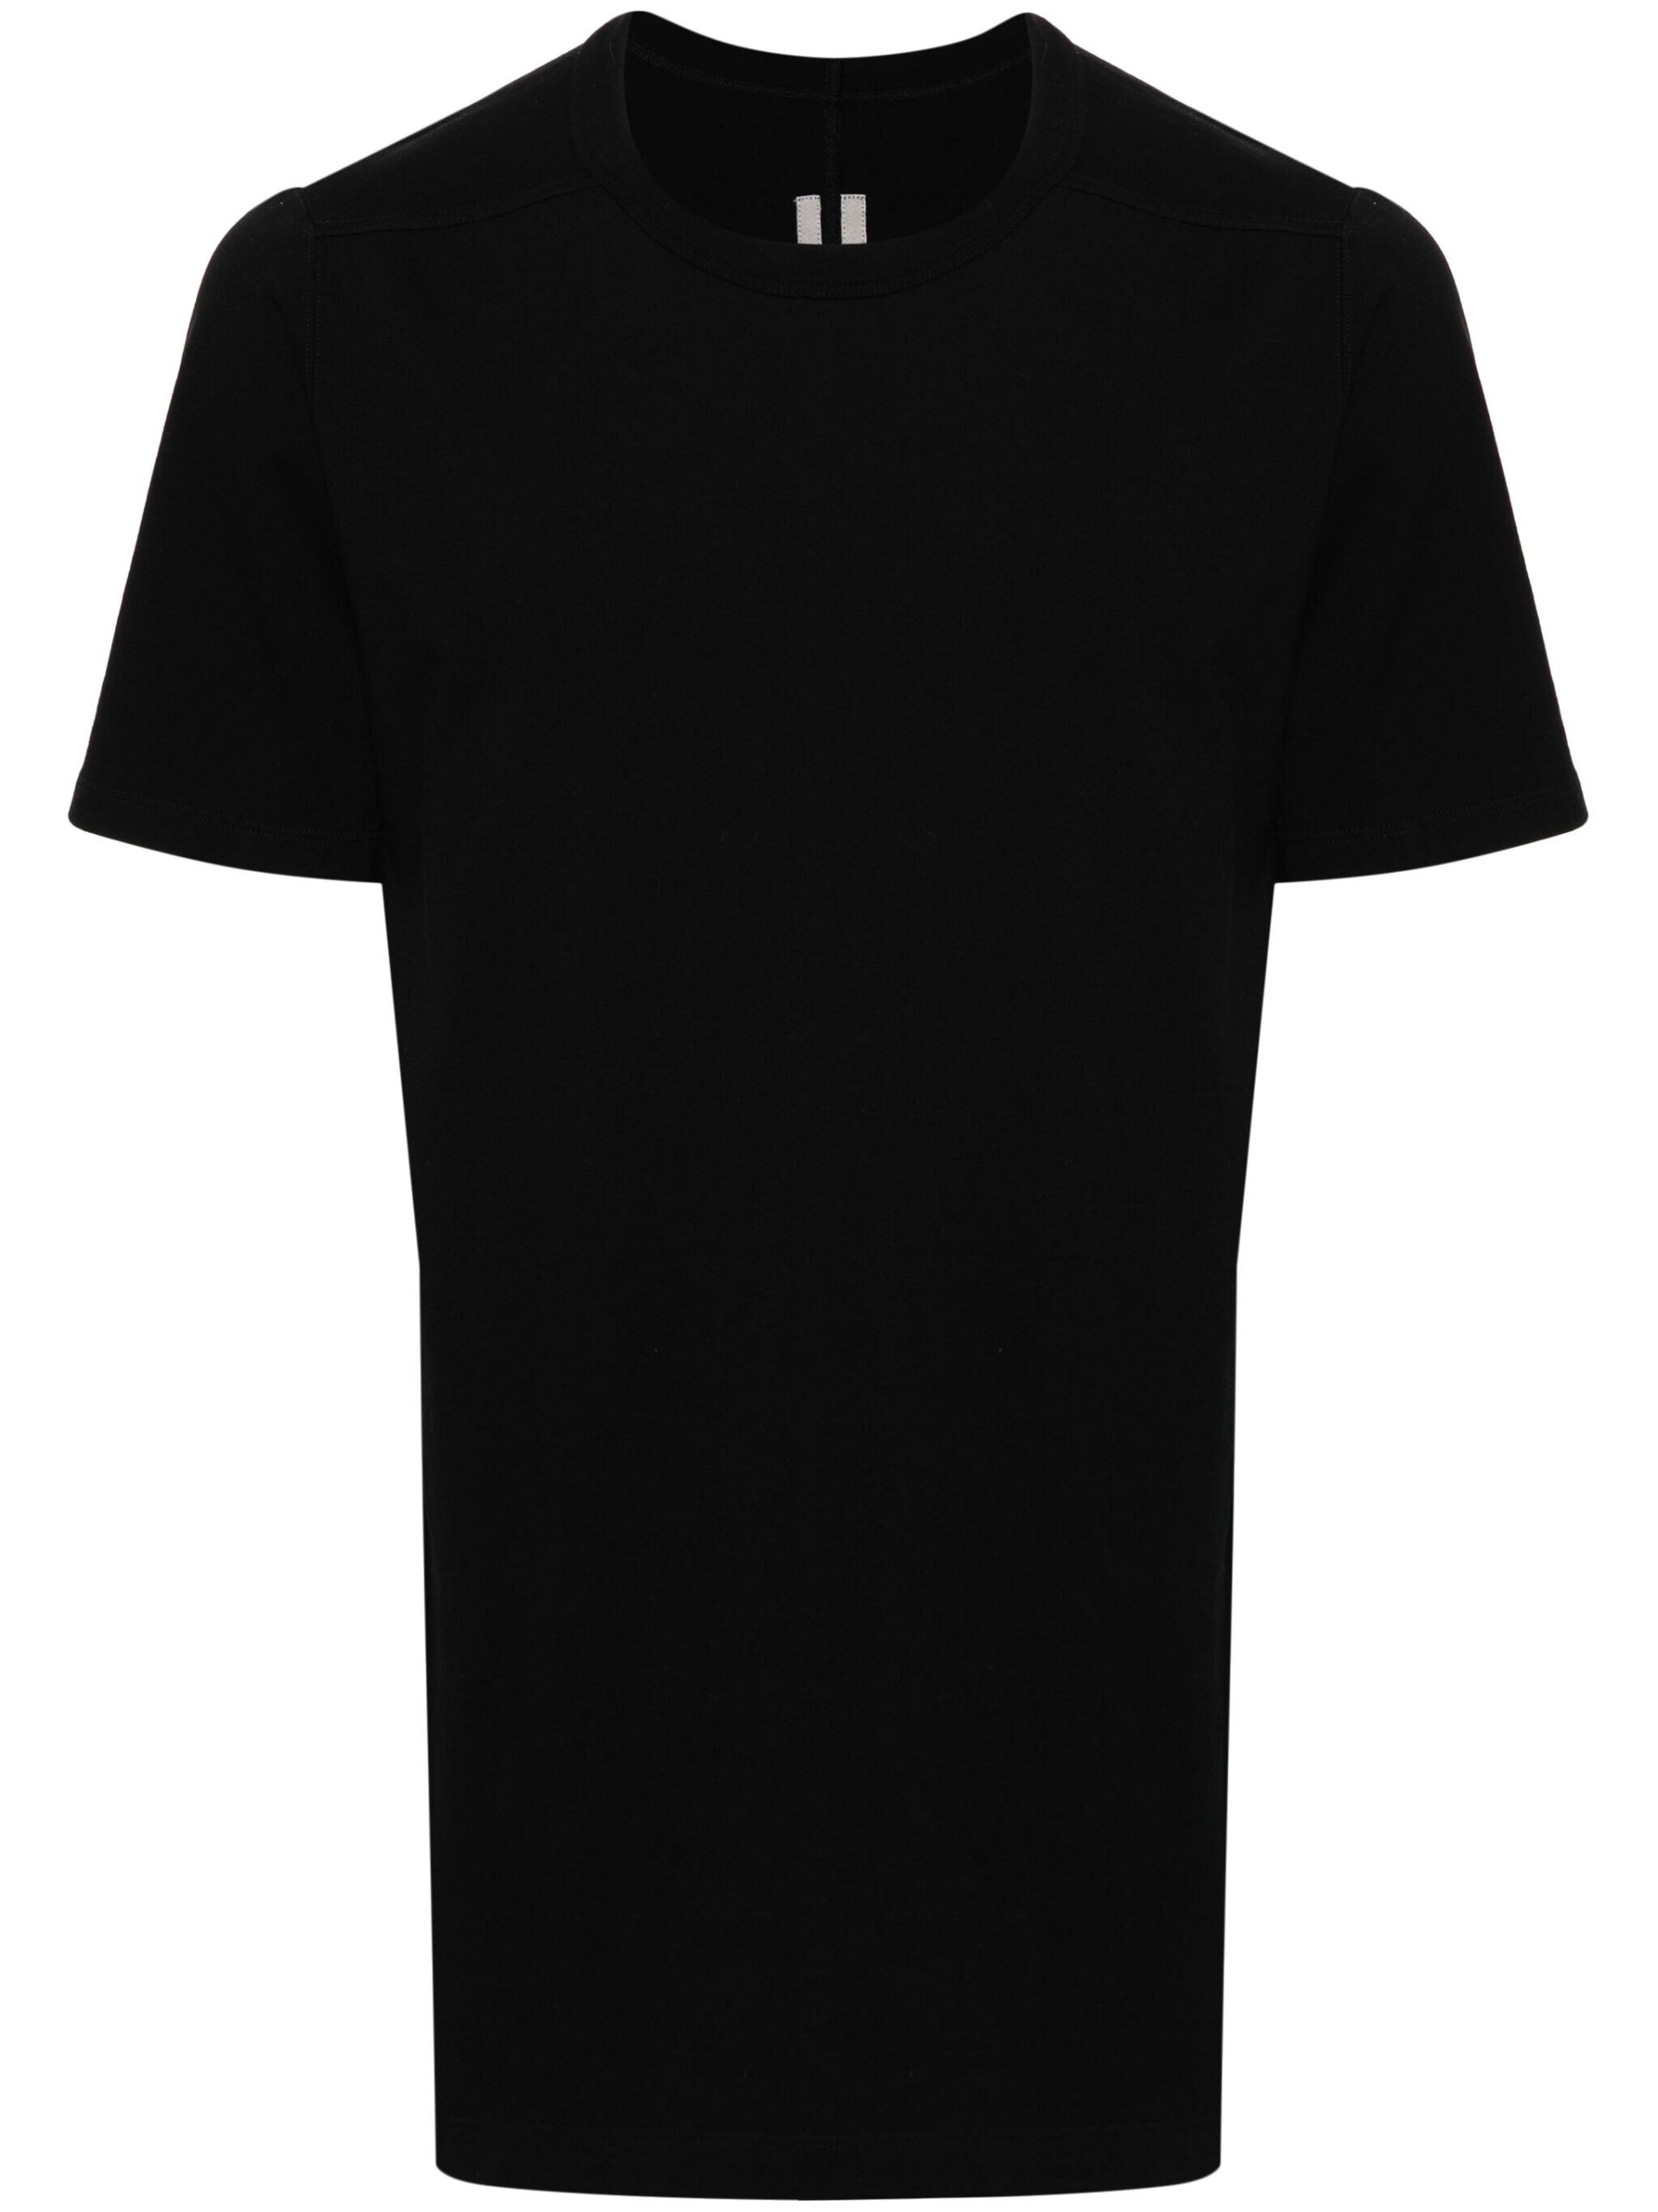 Black Crew Neck Organic Cotton T-Shirt - 1